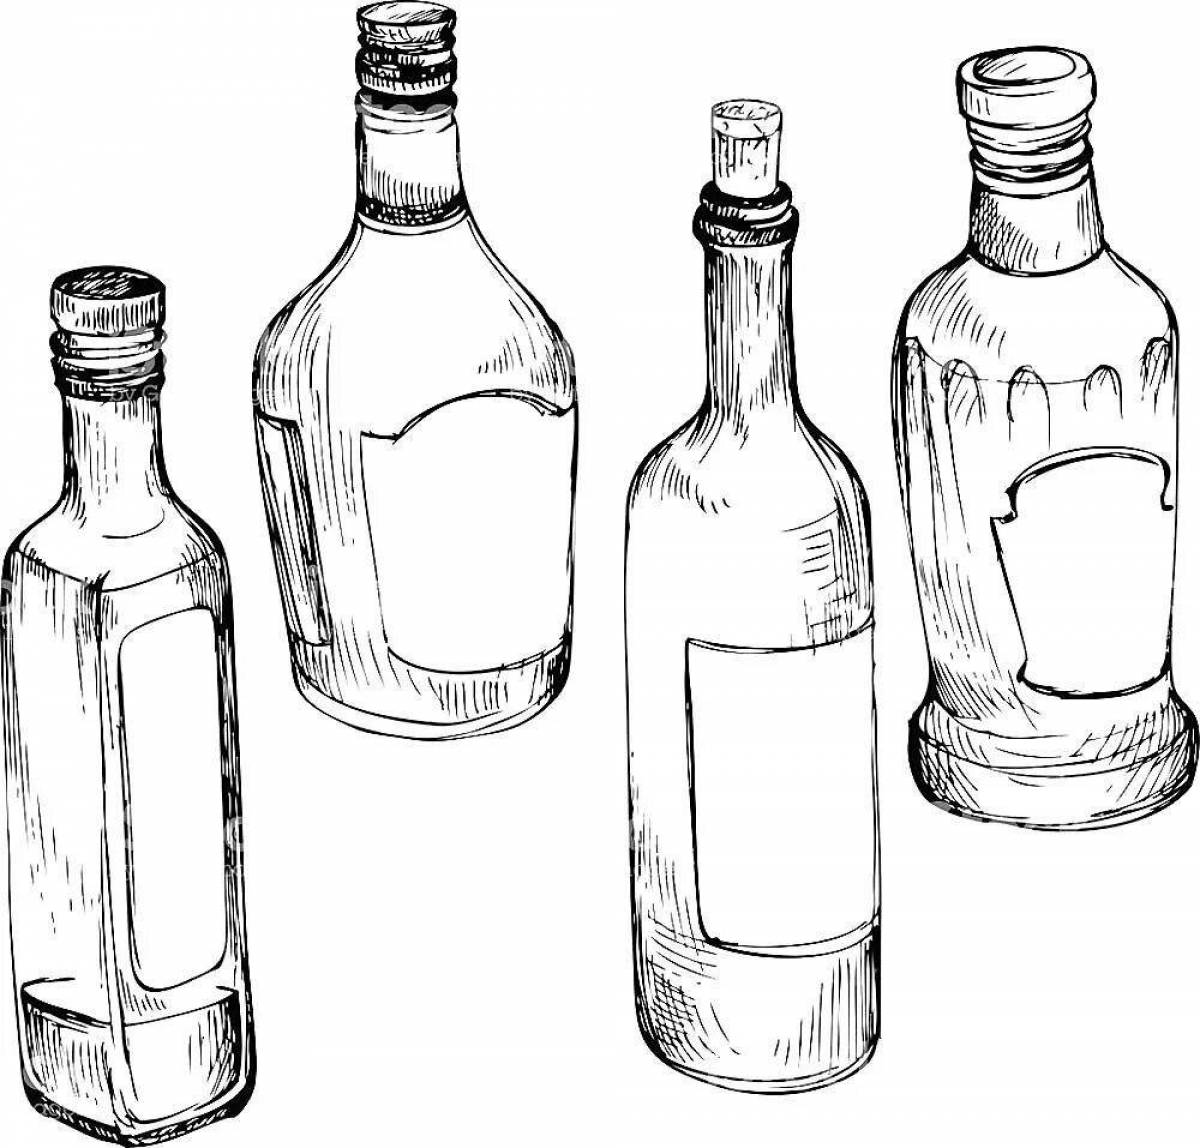 Colouring a joyful bottle of alcohol